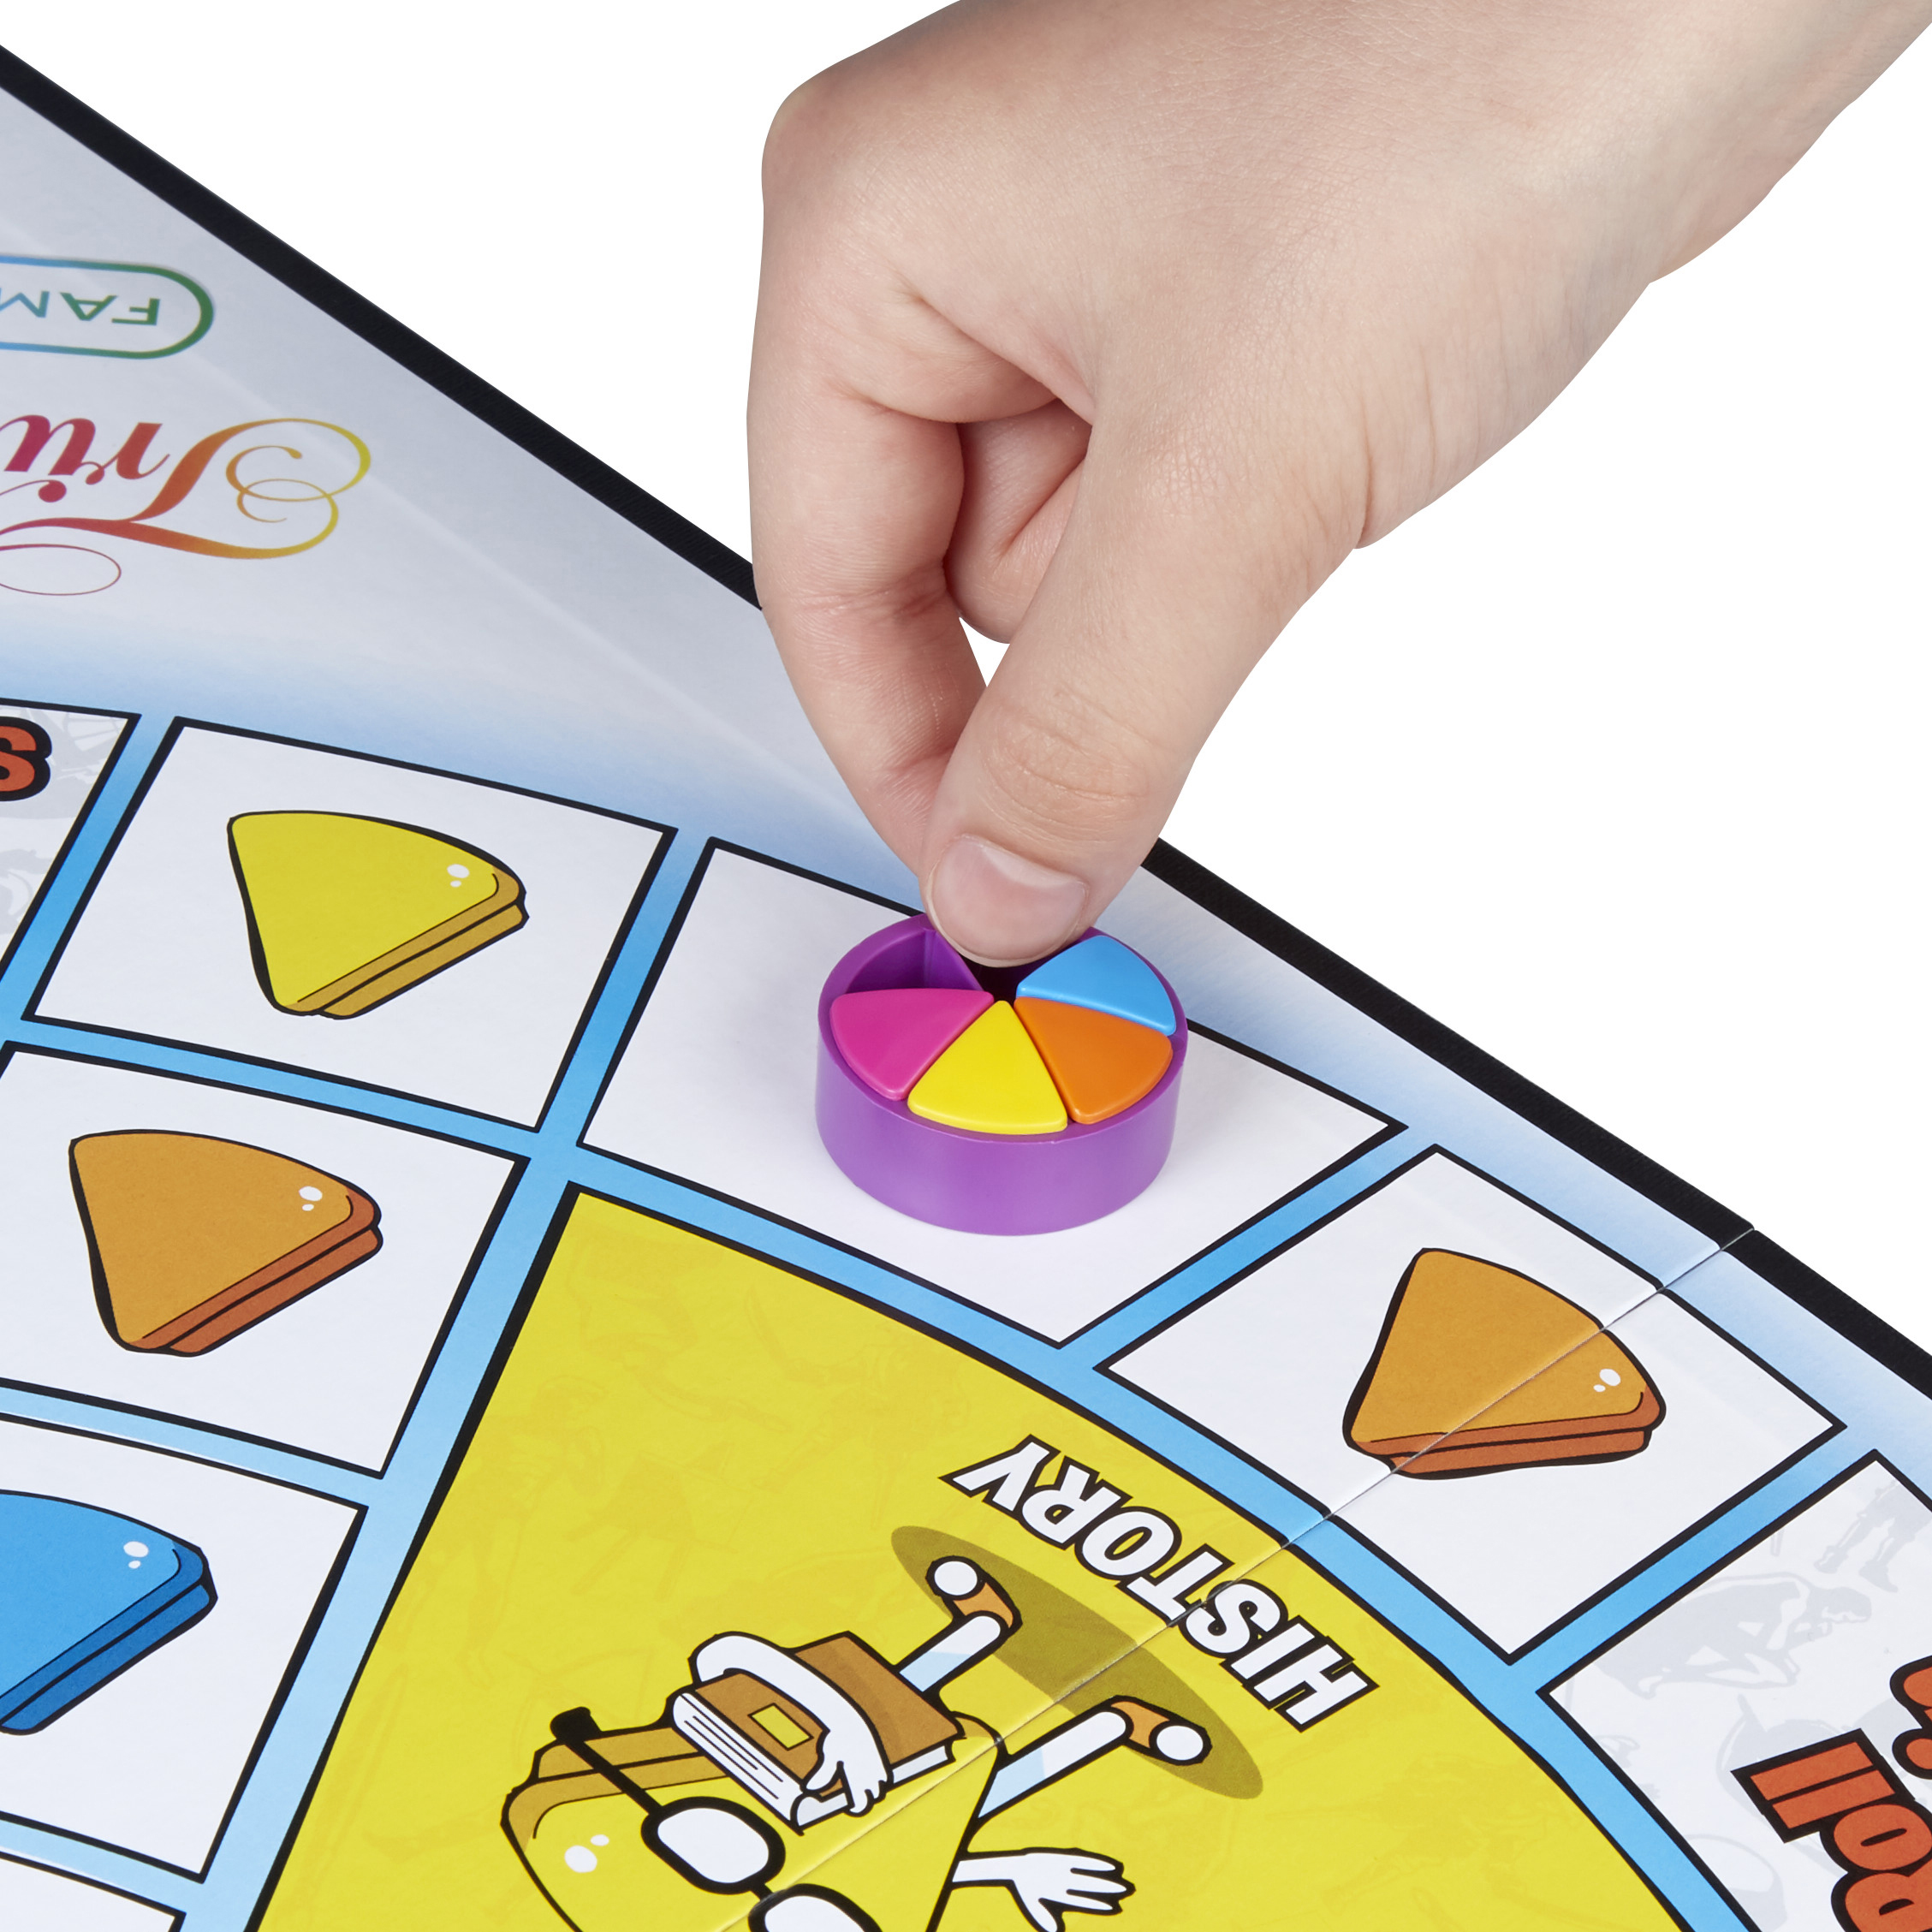 HASBRO GAMING Trivial Pursuit Familien Edition Gesellschaftsspiel Mehrfarbig